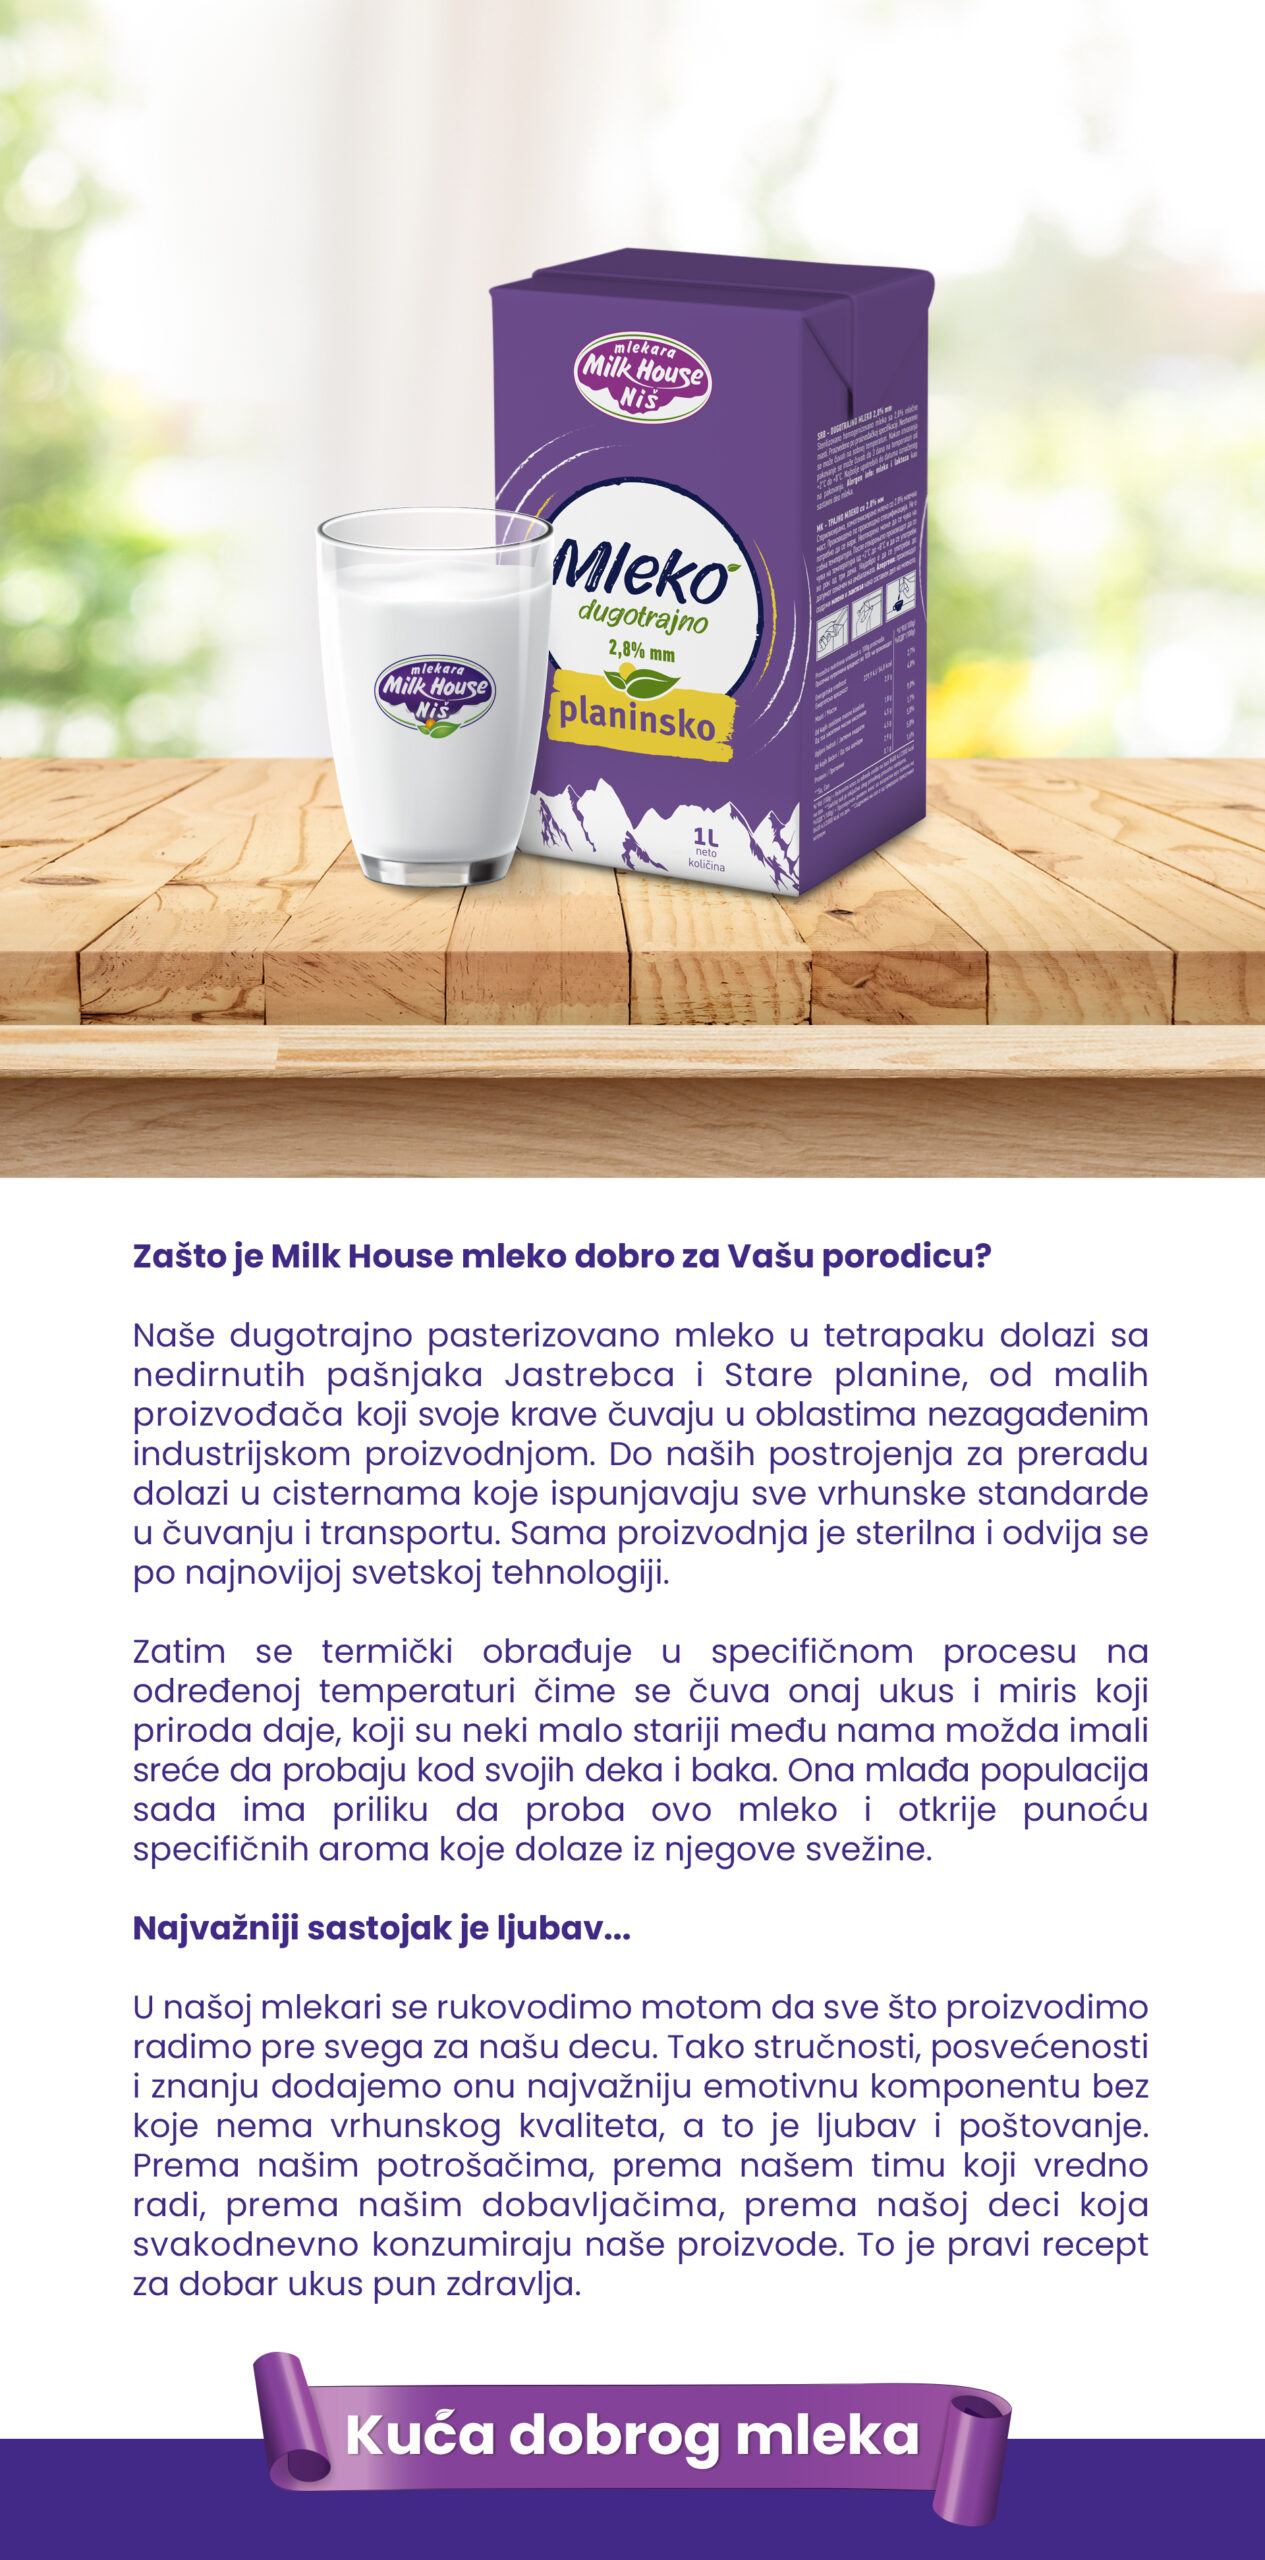 milk house